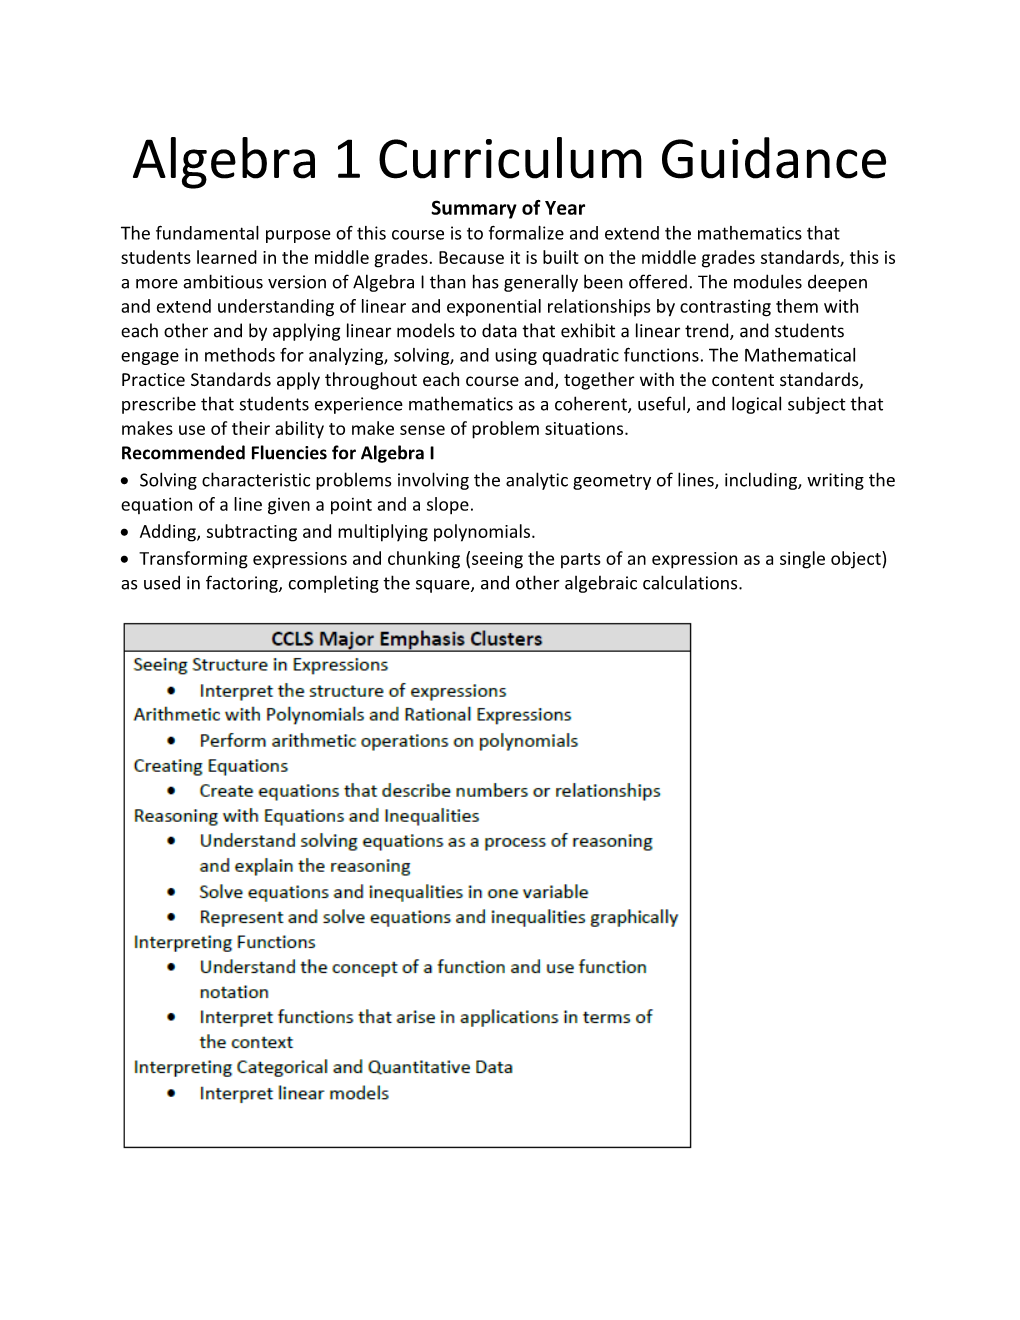 Recommended Fluencies for Algebra I